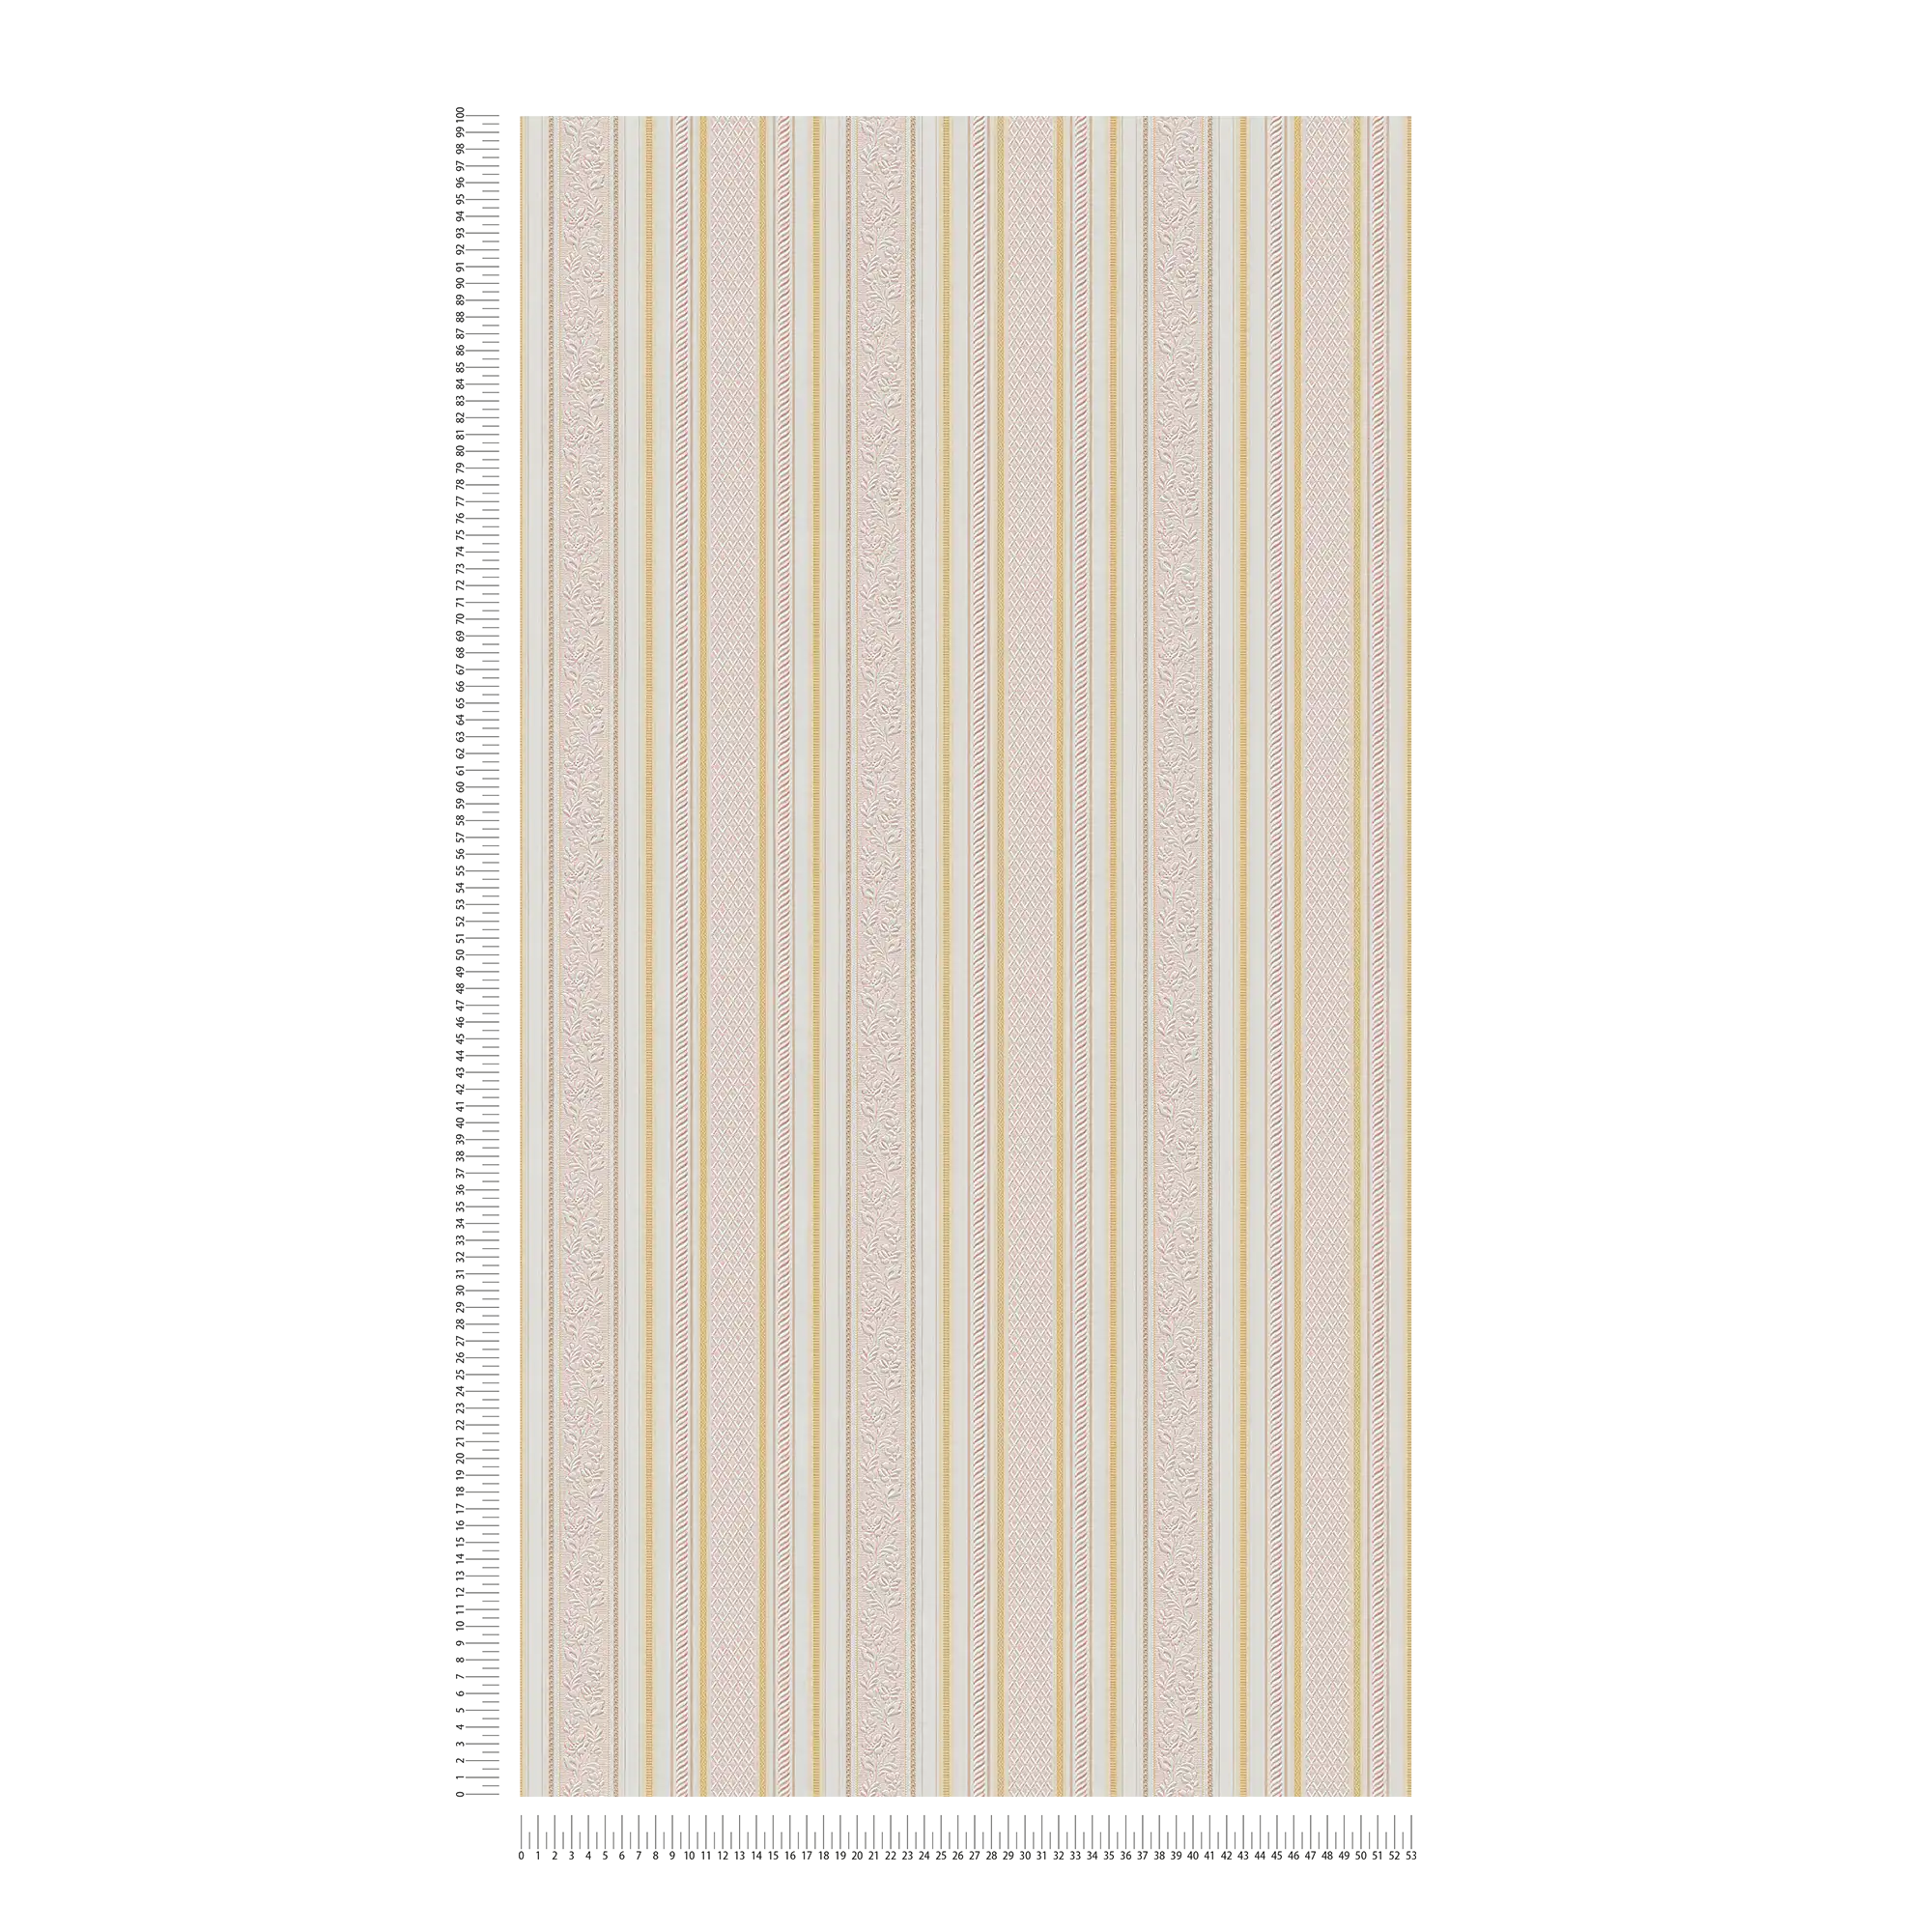             Vintage wallpaper renaissance stripe pattern - metallic
        